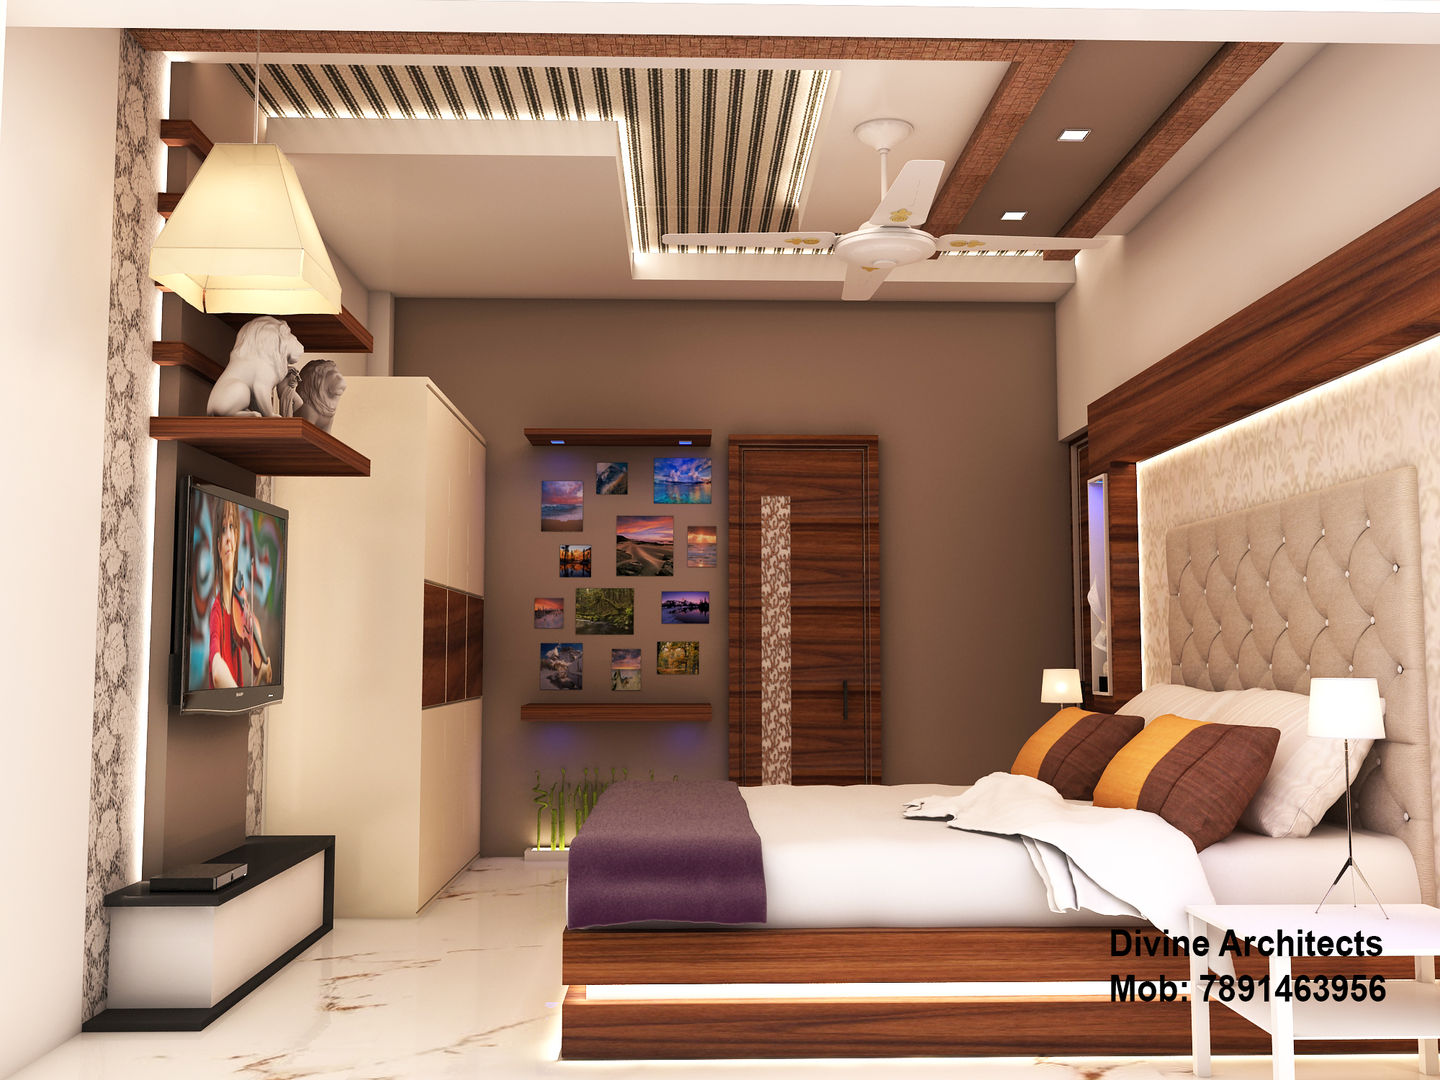 Son_ s bed room interior design for mr. Ramavtar Khunteta jalmahal site joraver Singh gate govind nagar east Jaipur, divine architects divine architects Camera da letto moderna